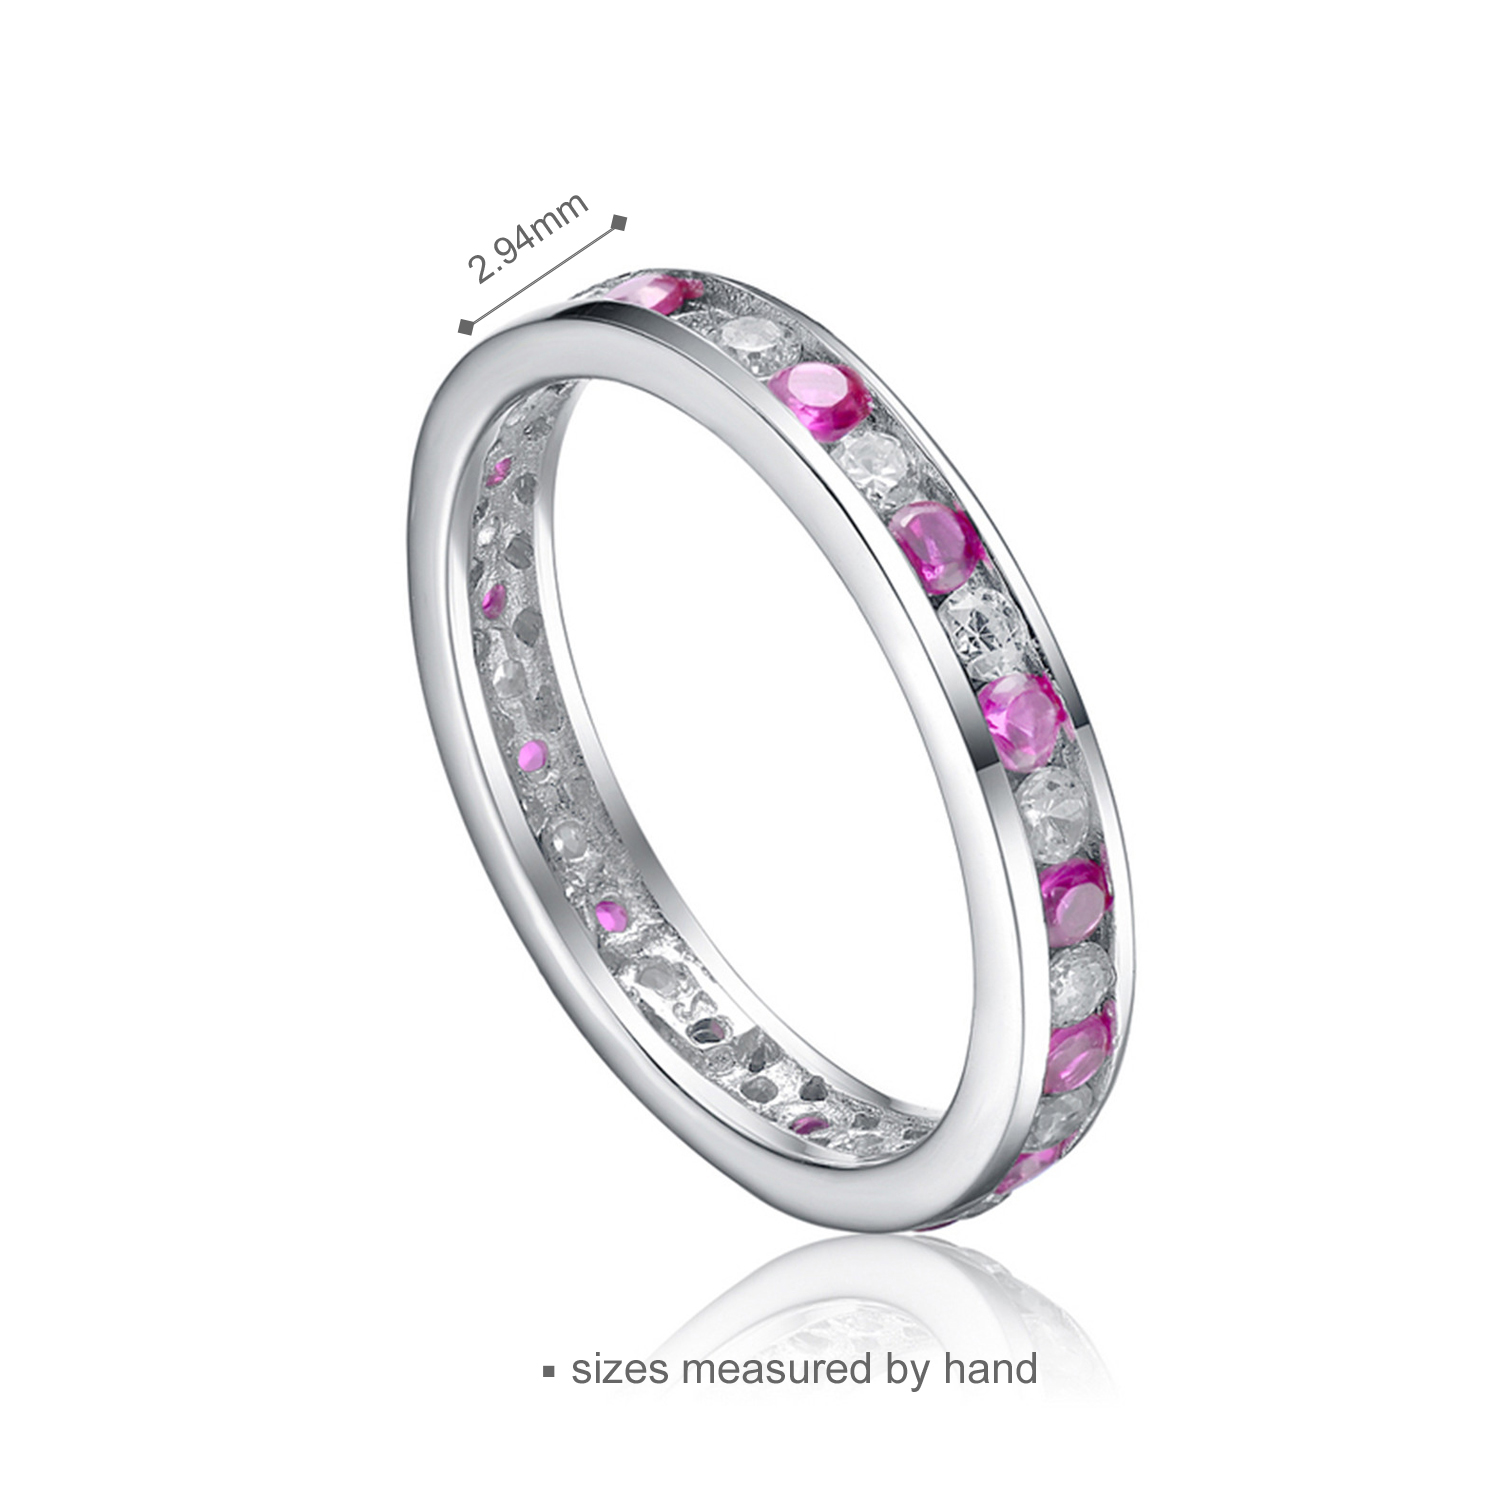 Sterling silver ring eternity wedding engagement finger ring design for women(图2)